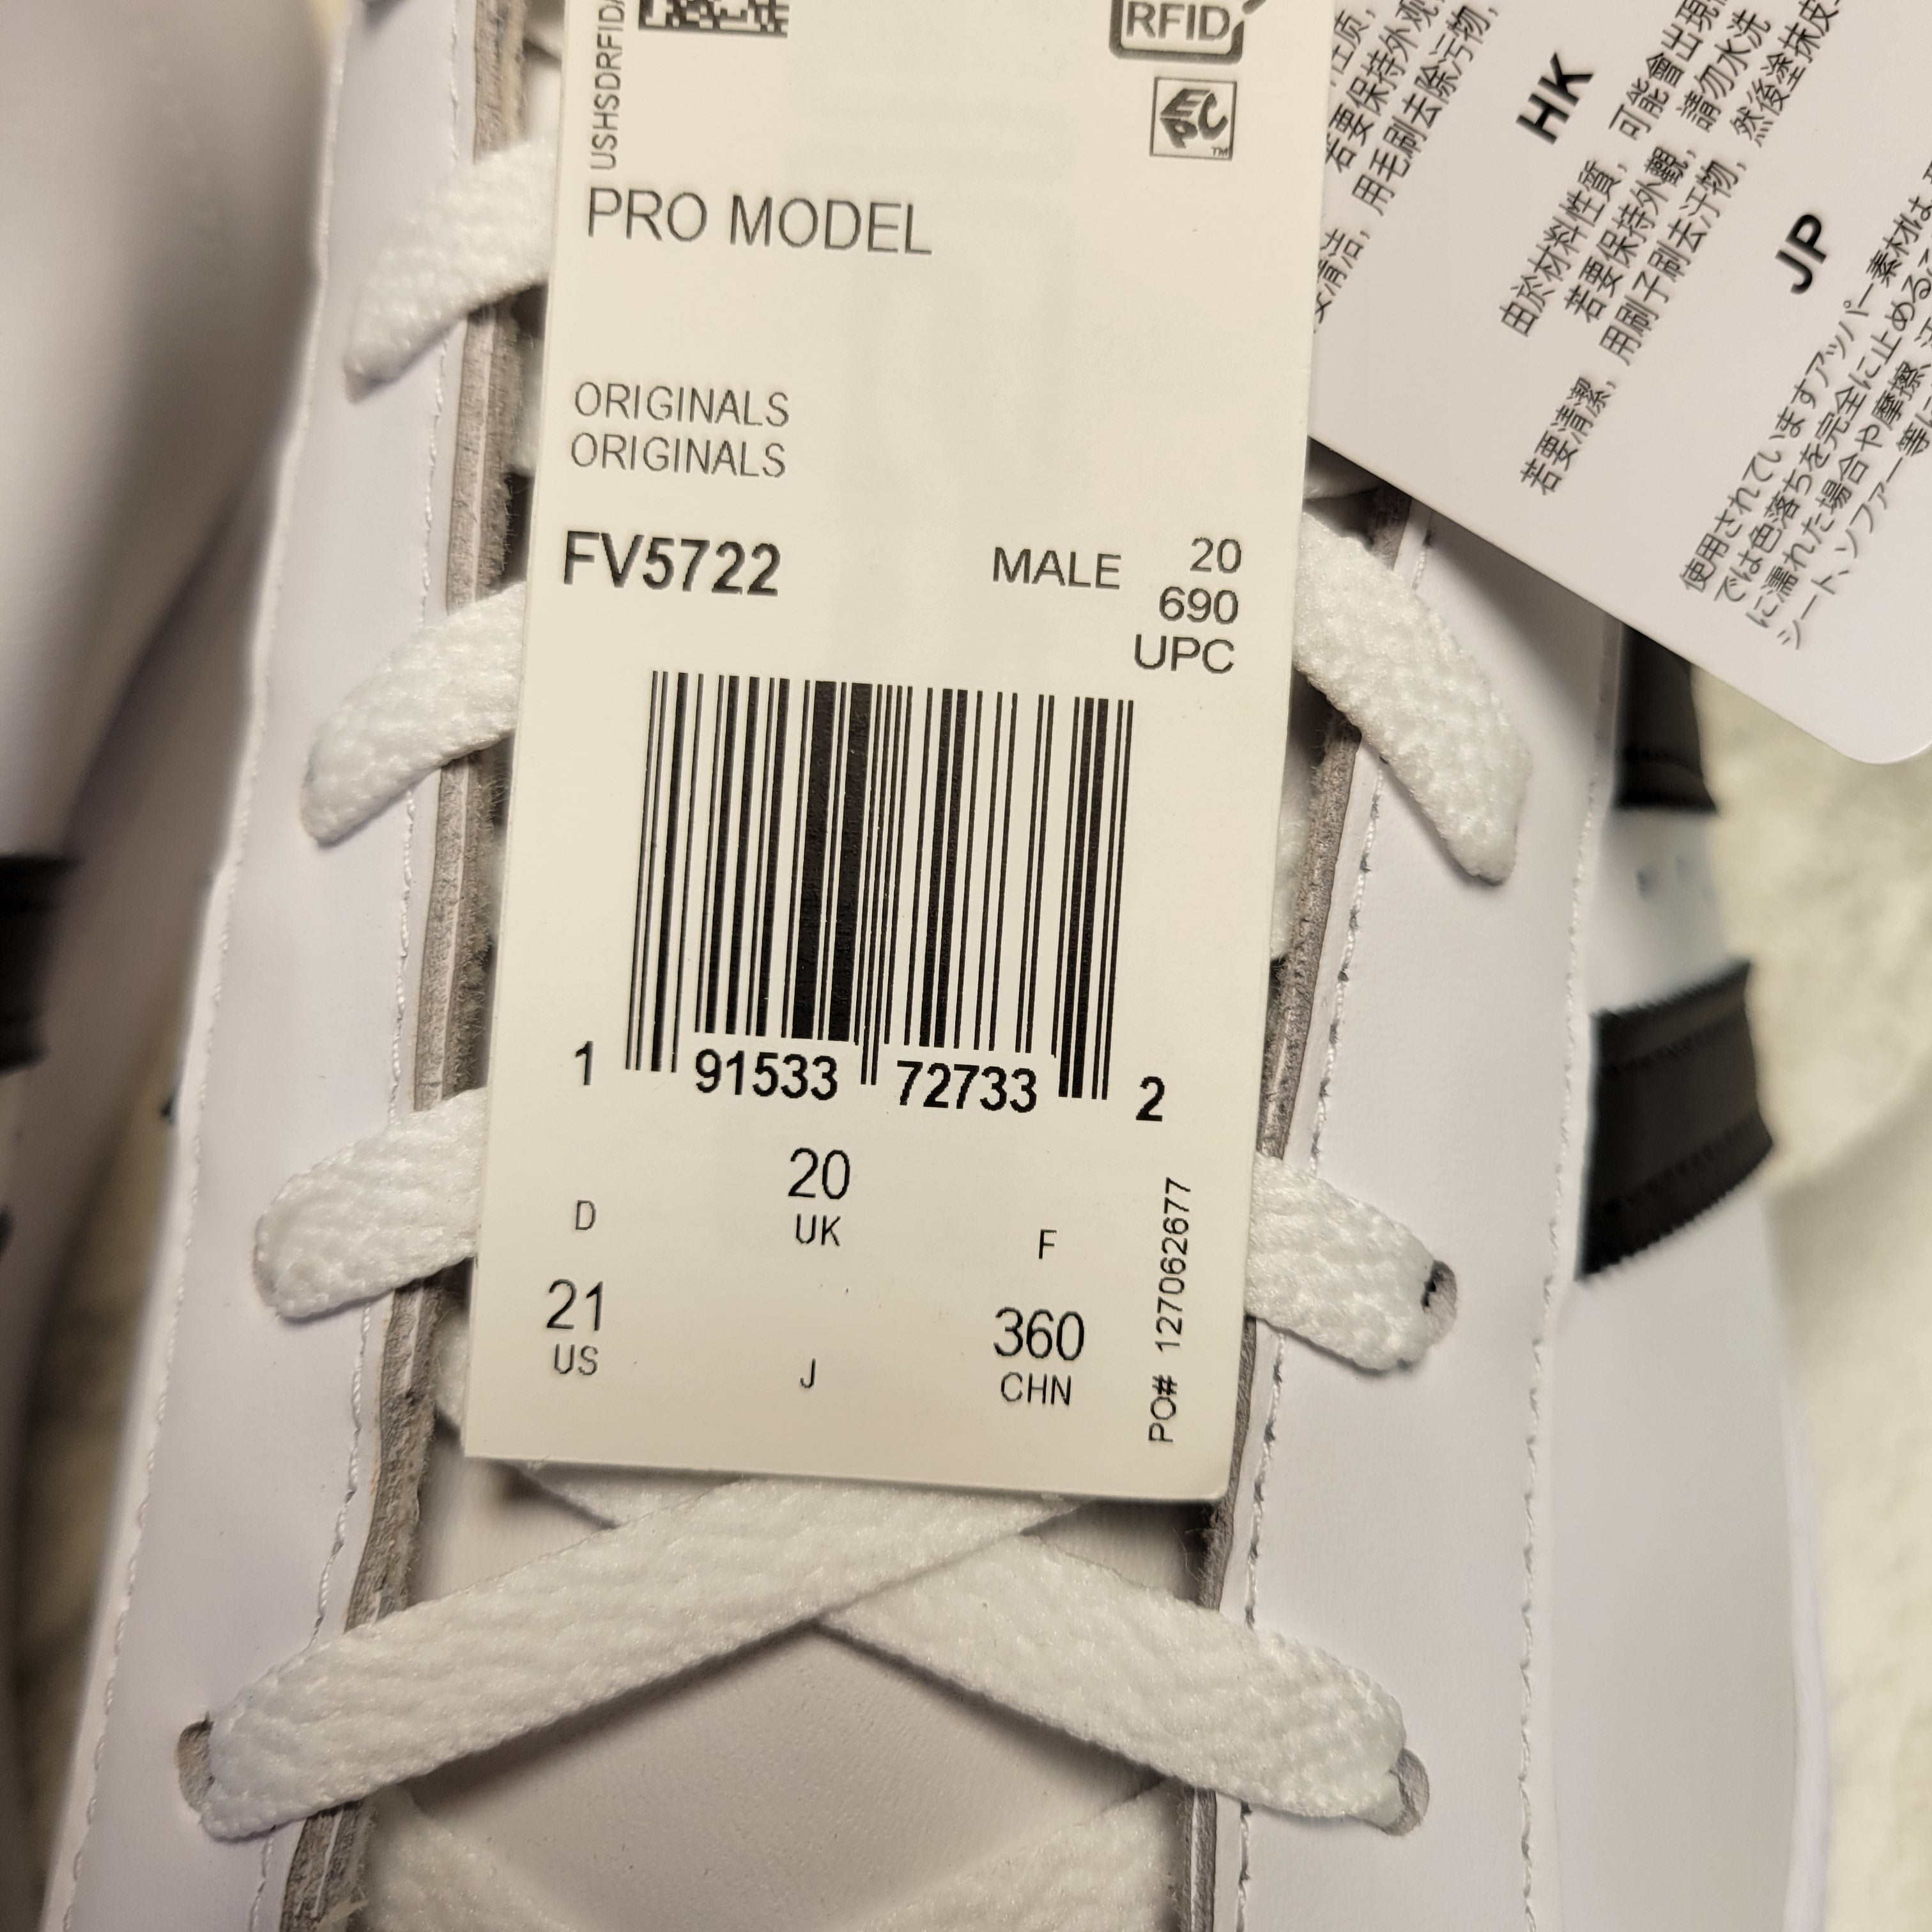 adidas Originals Men's Pro Model Sneaker (21, White/Black/Gold Foil) (7872381649134)